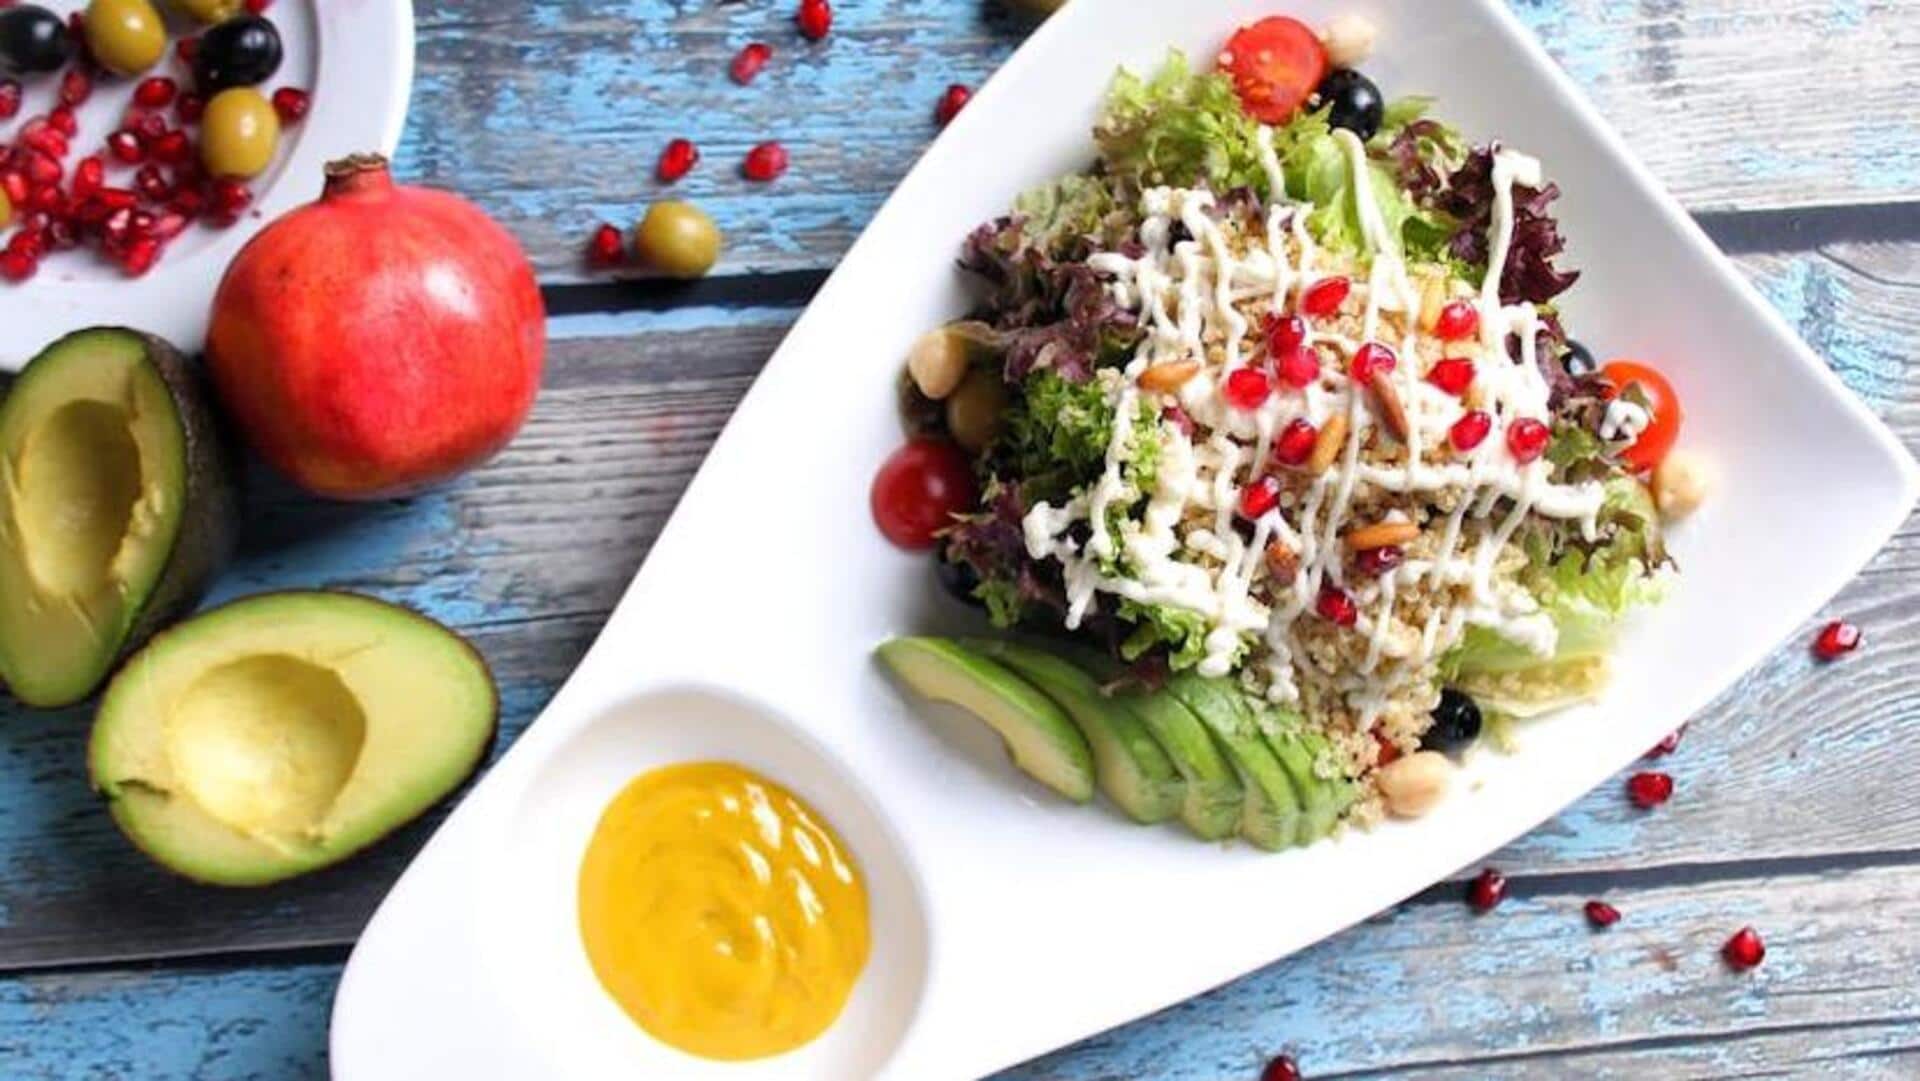 Quinoa-based vegan breakfasts or healthy mornings